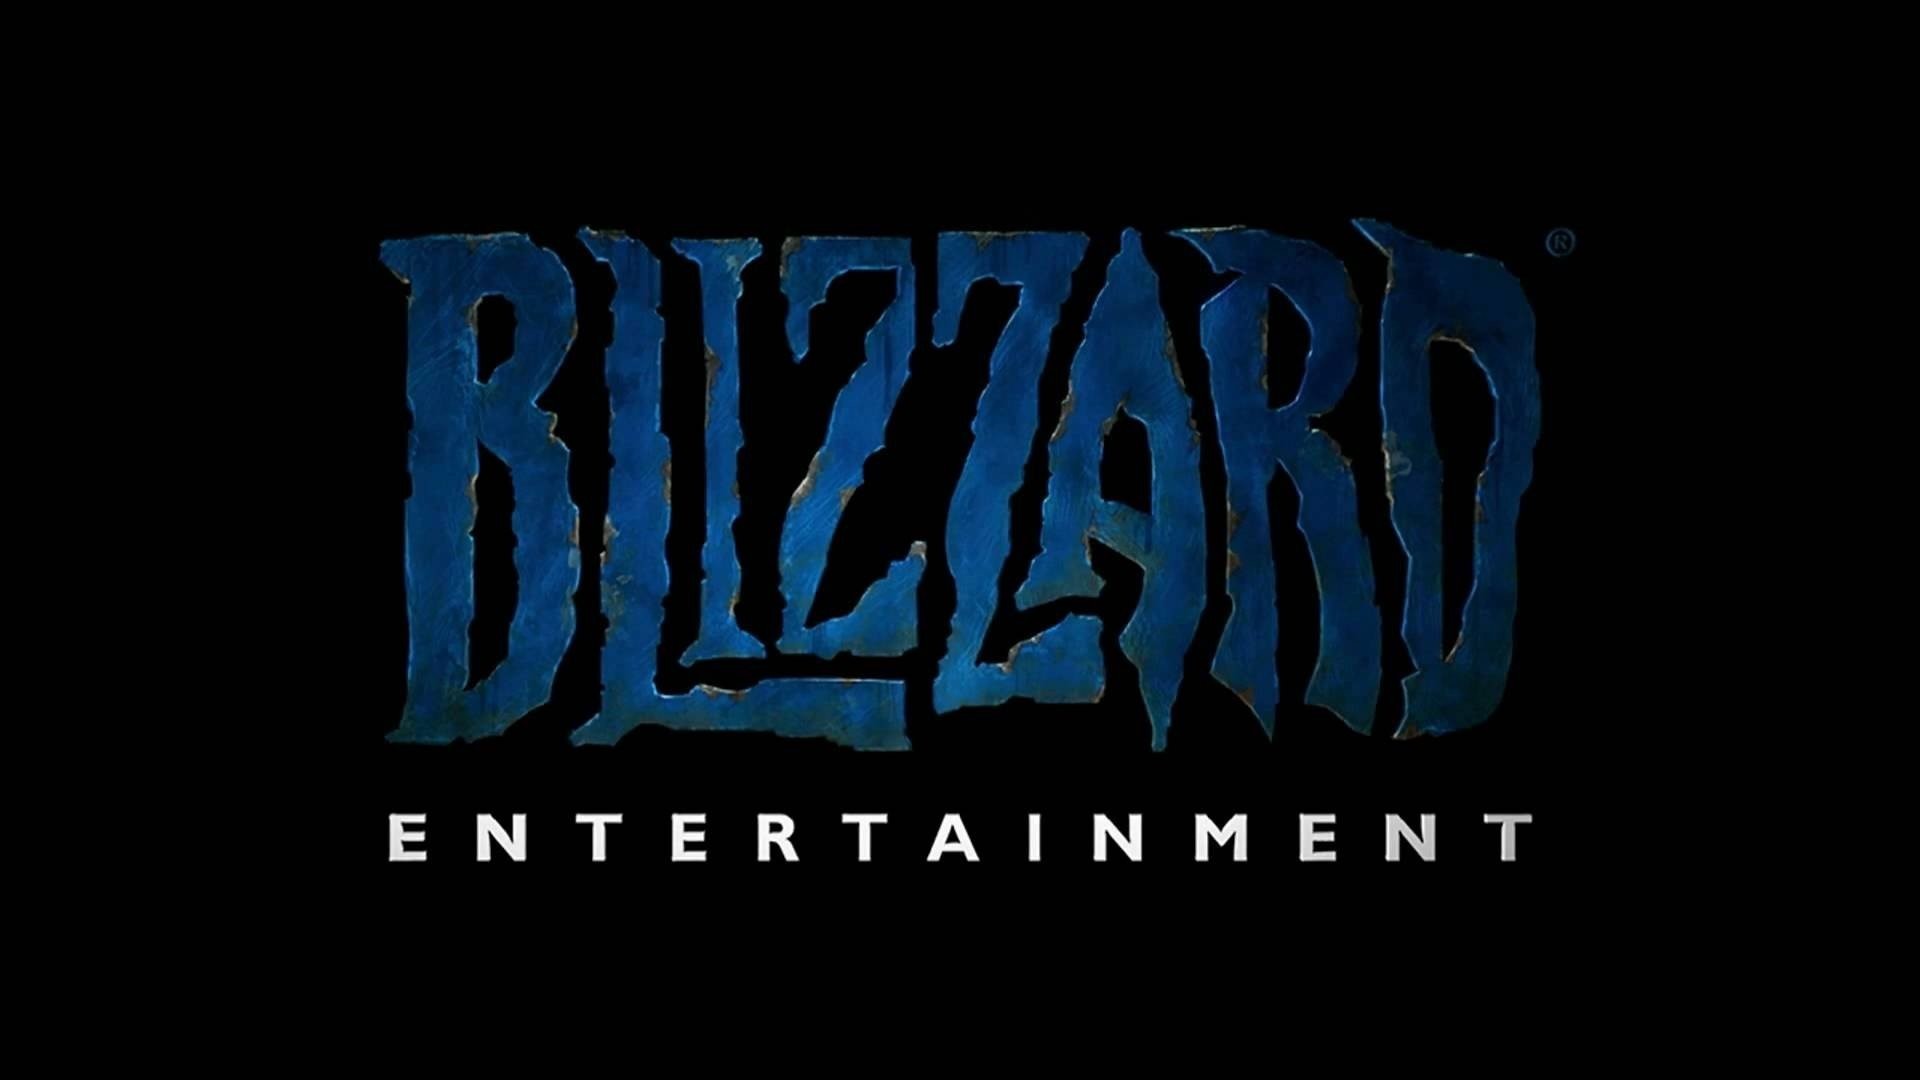 Former Call of Duty Boss Johanna Faries Announced as New Blizzard Entertainment President